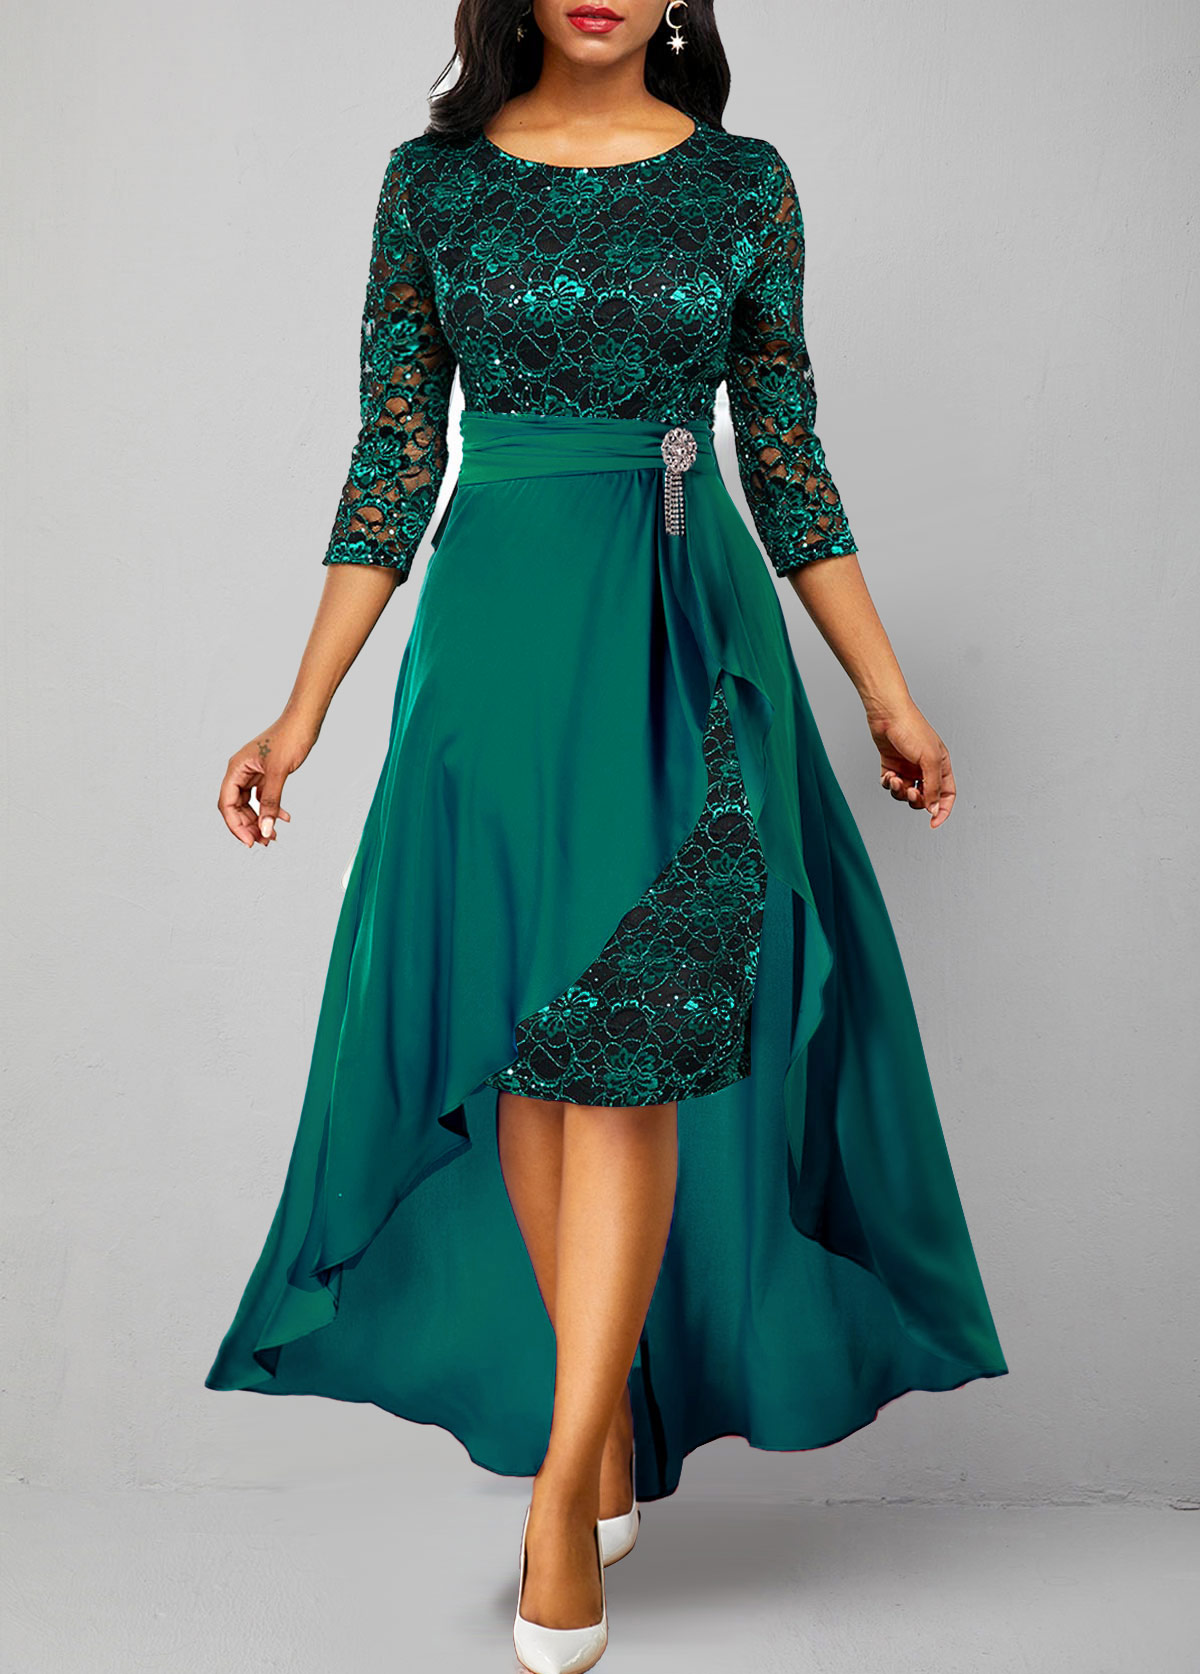 ROTITA Lace Patchwork Turquoise 3/4 Sleeve Dress